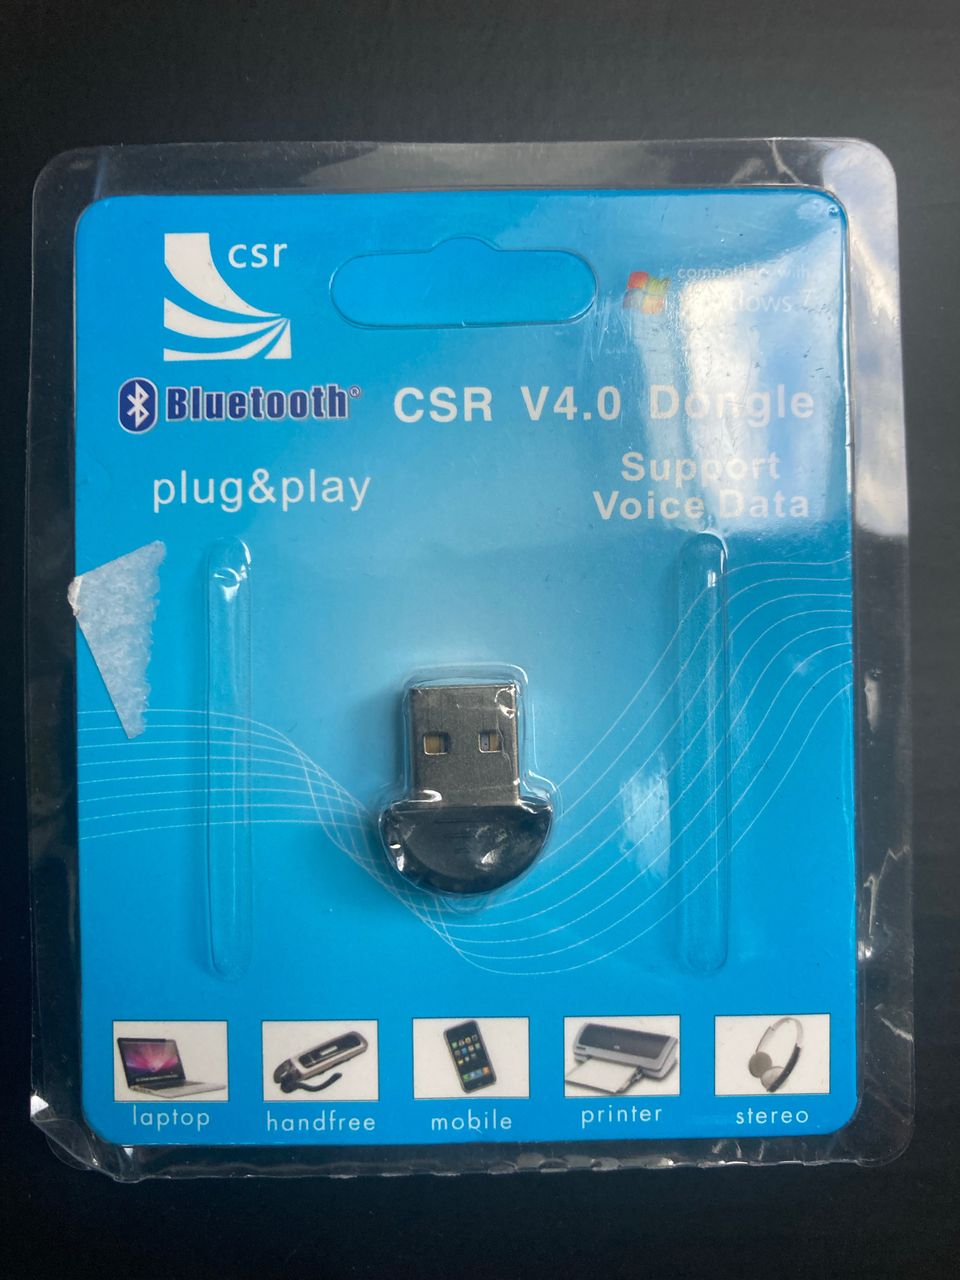 USB Bluetooth CSR V4.0 dongle